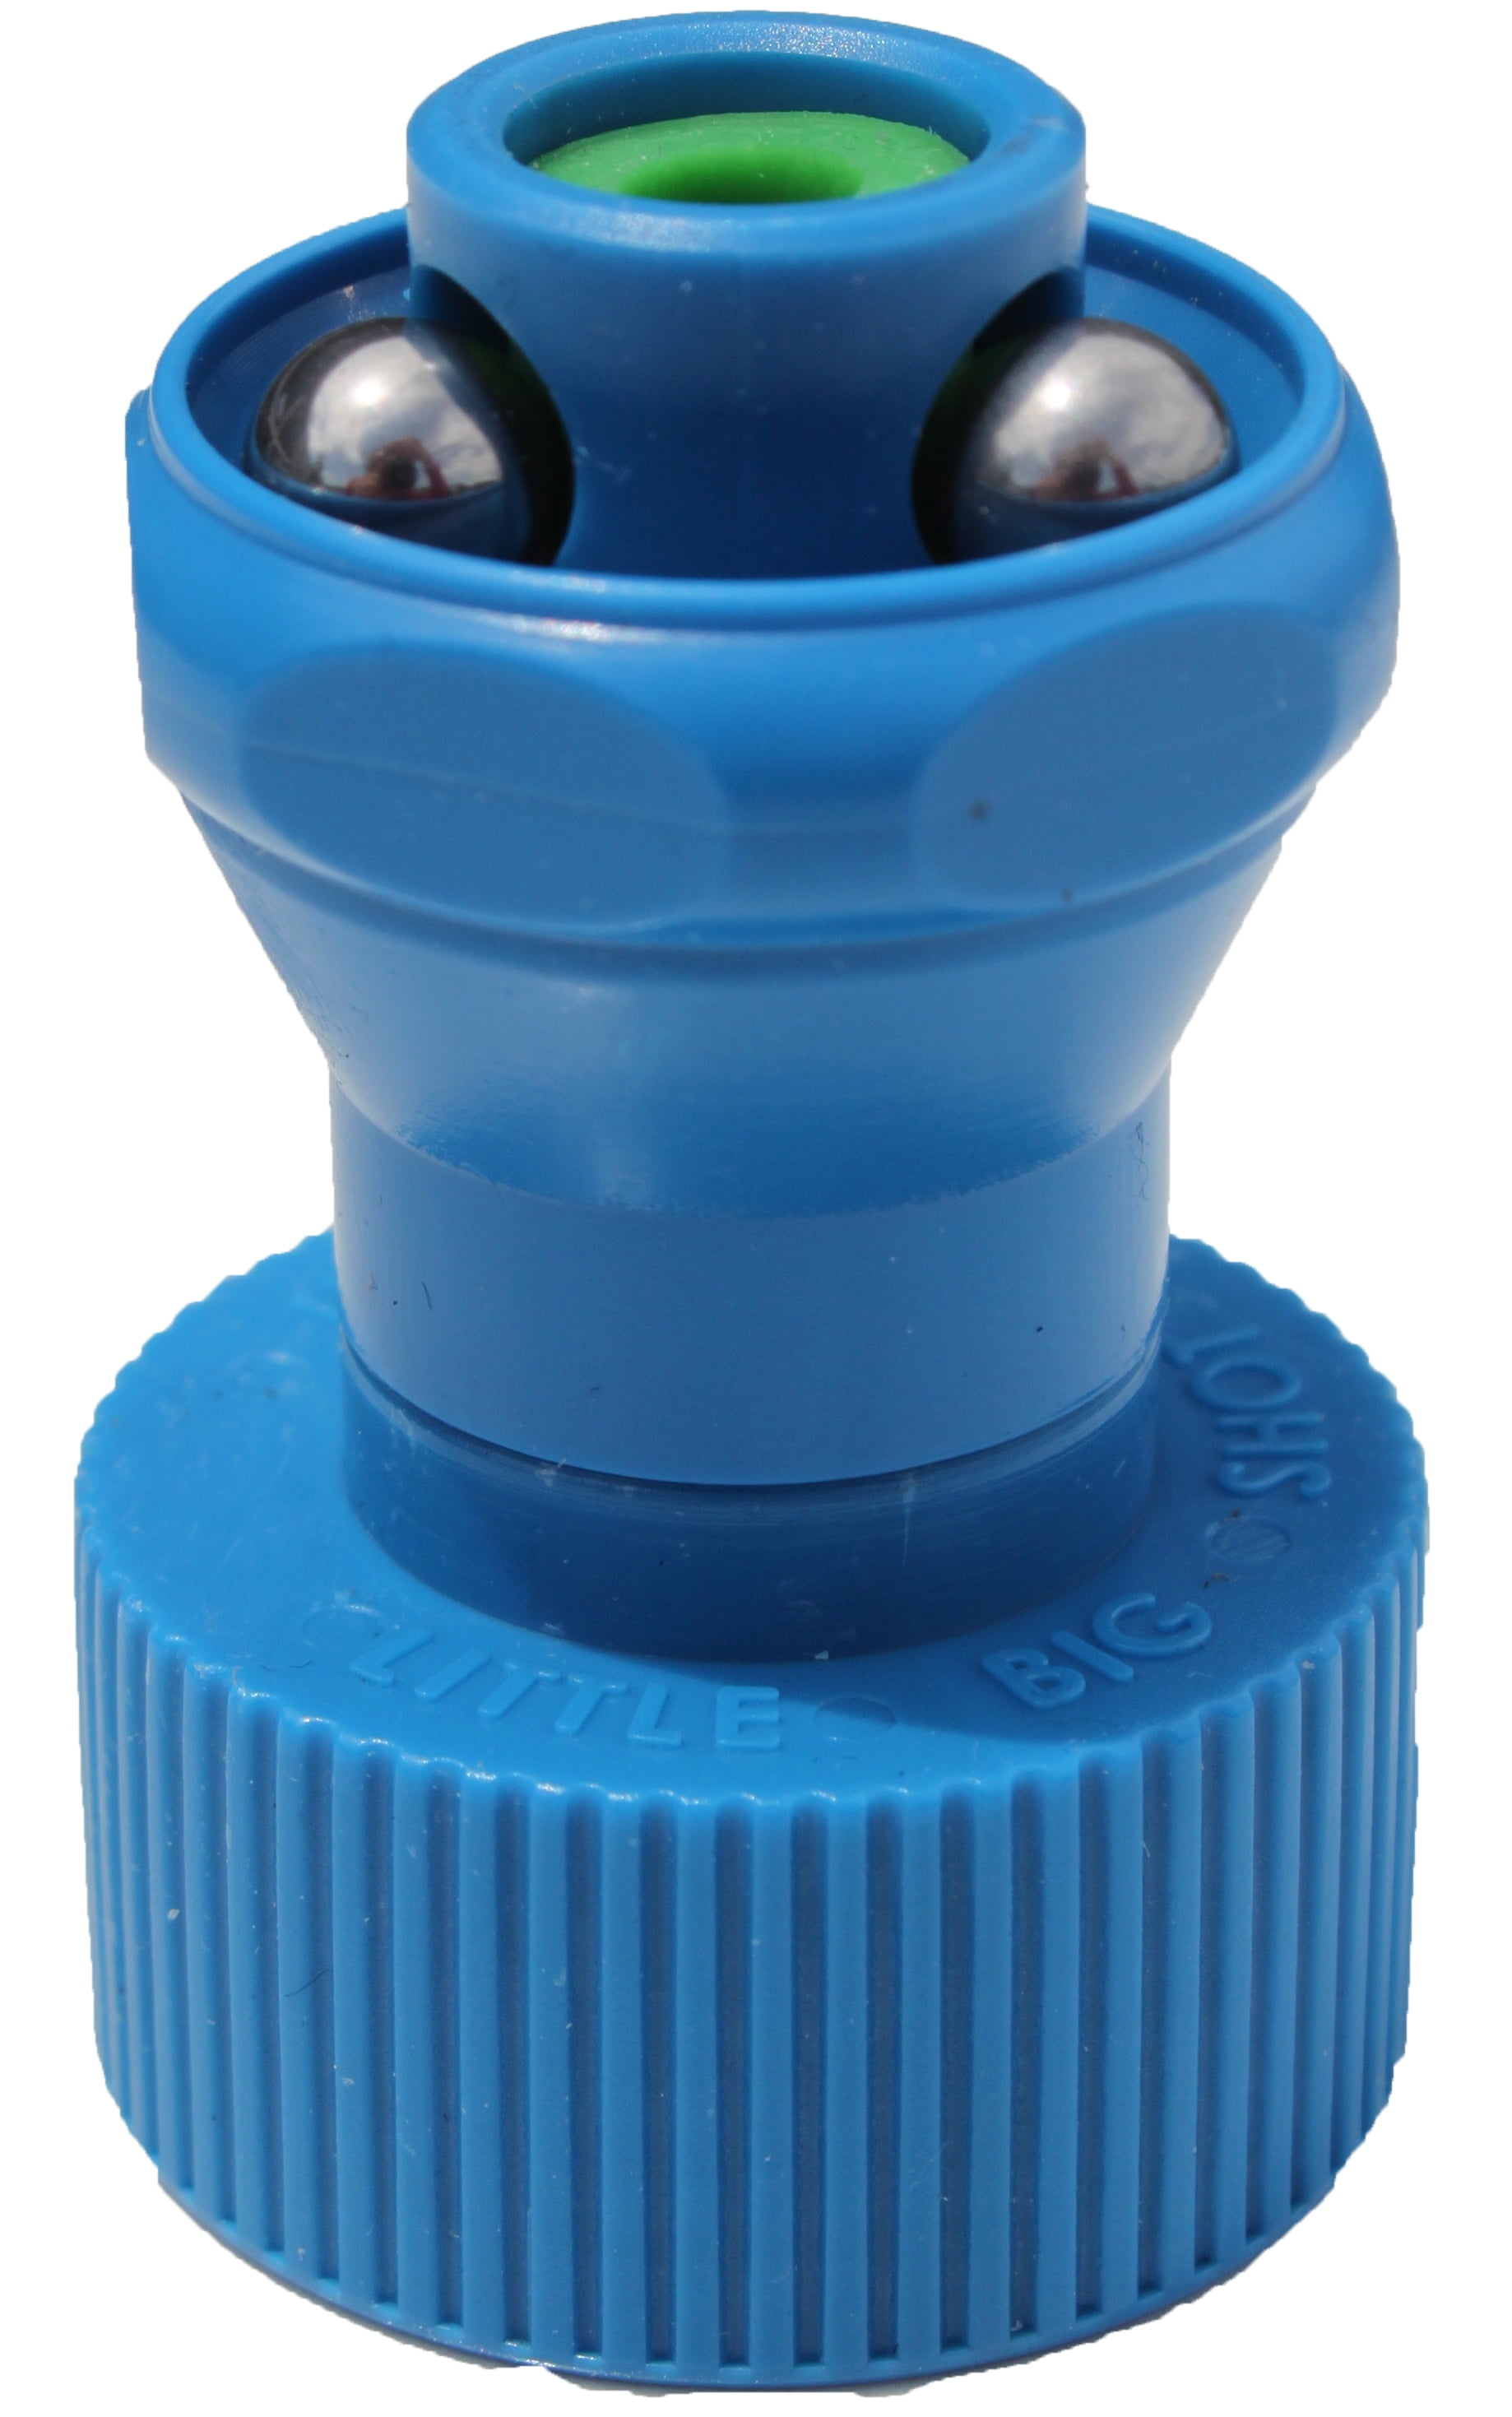 Dd185 Little Big Shot Fully Adjustable Super Hose Nozzle More Force Less Water for sale online 